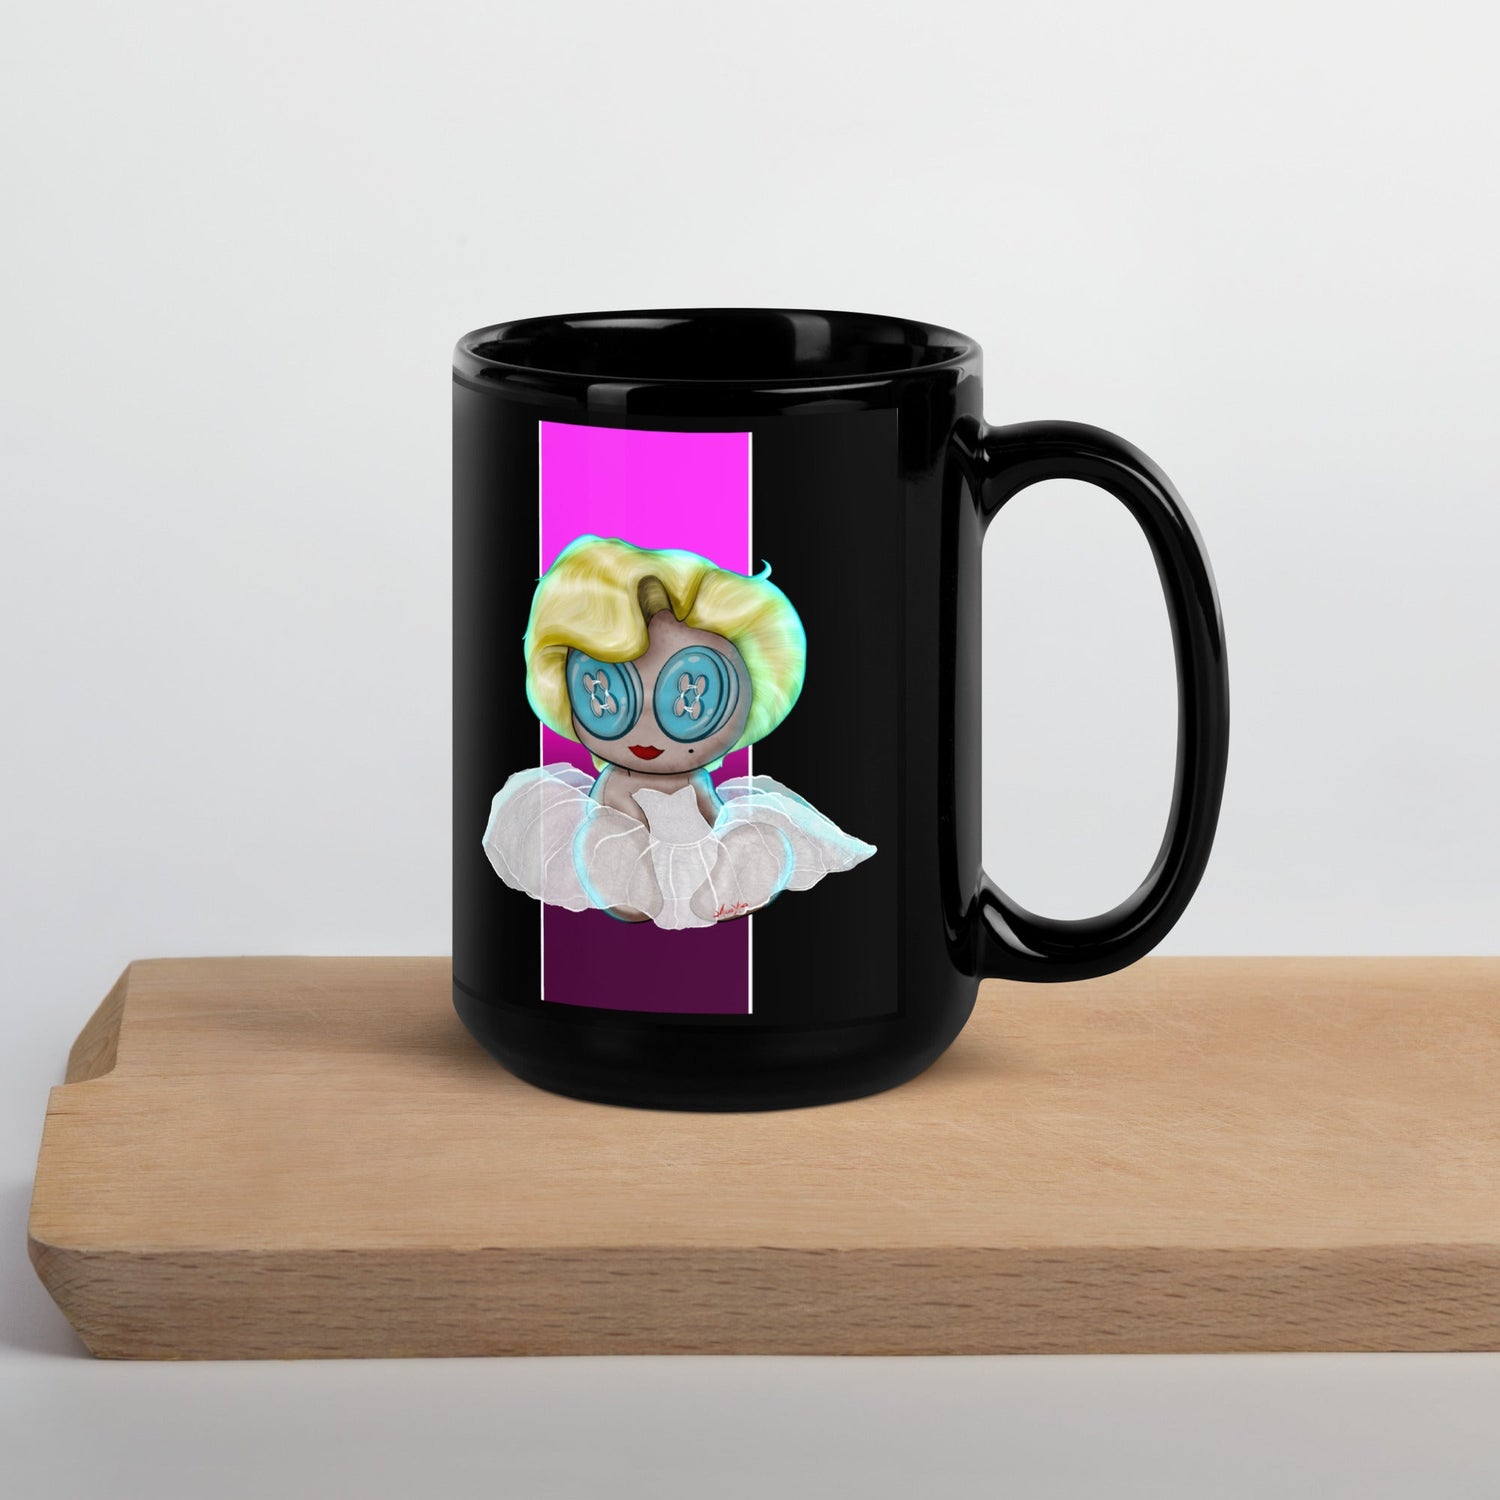 MicosMind Cups/Mugs